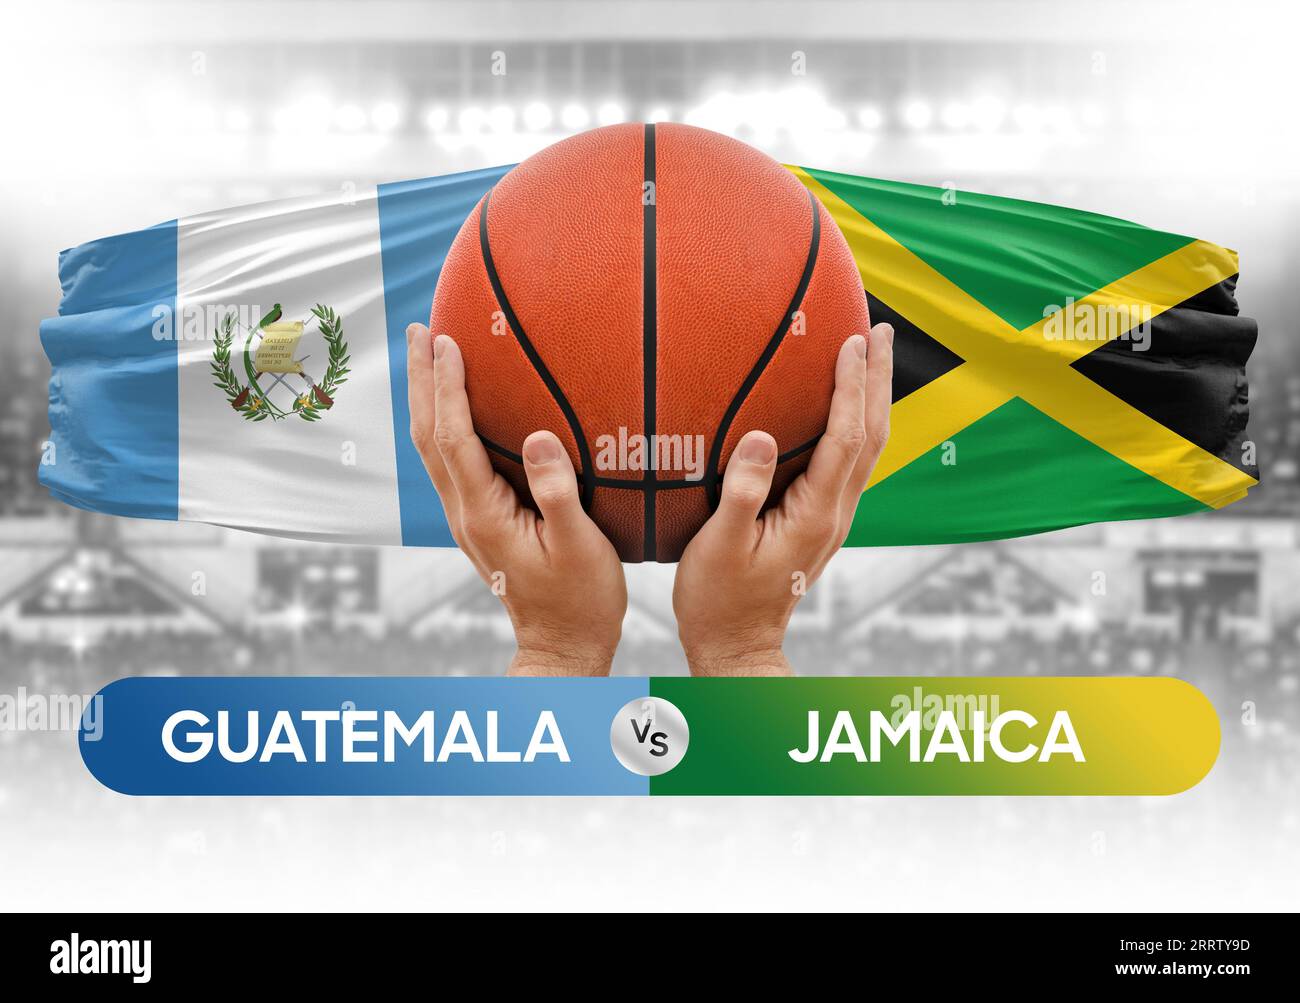 Guatemala vs Jamaica national basketball teams basket ball match competition cup concept image Stock Photo